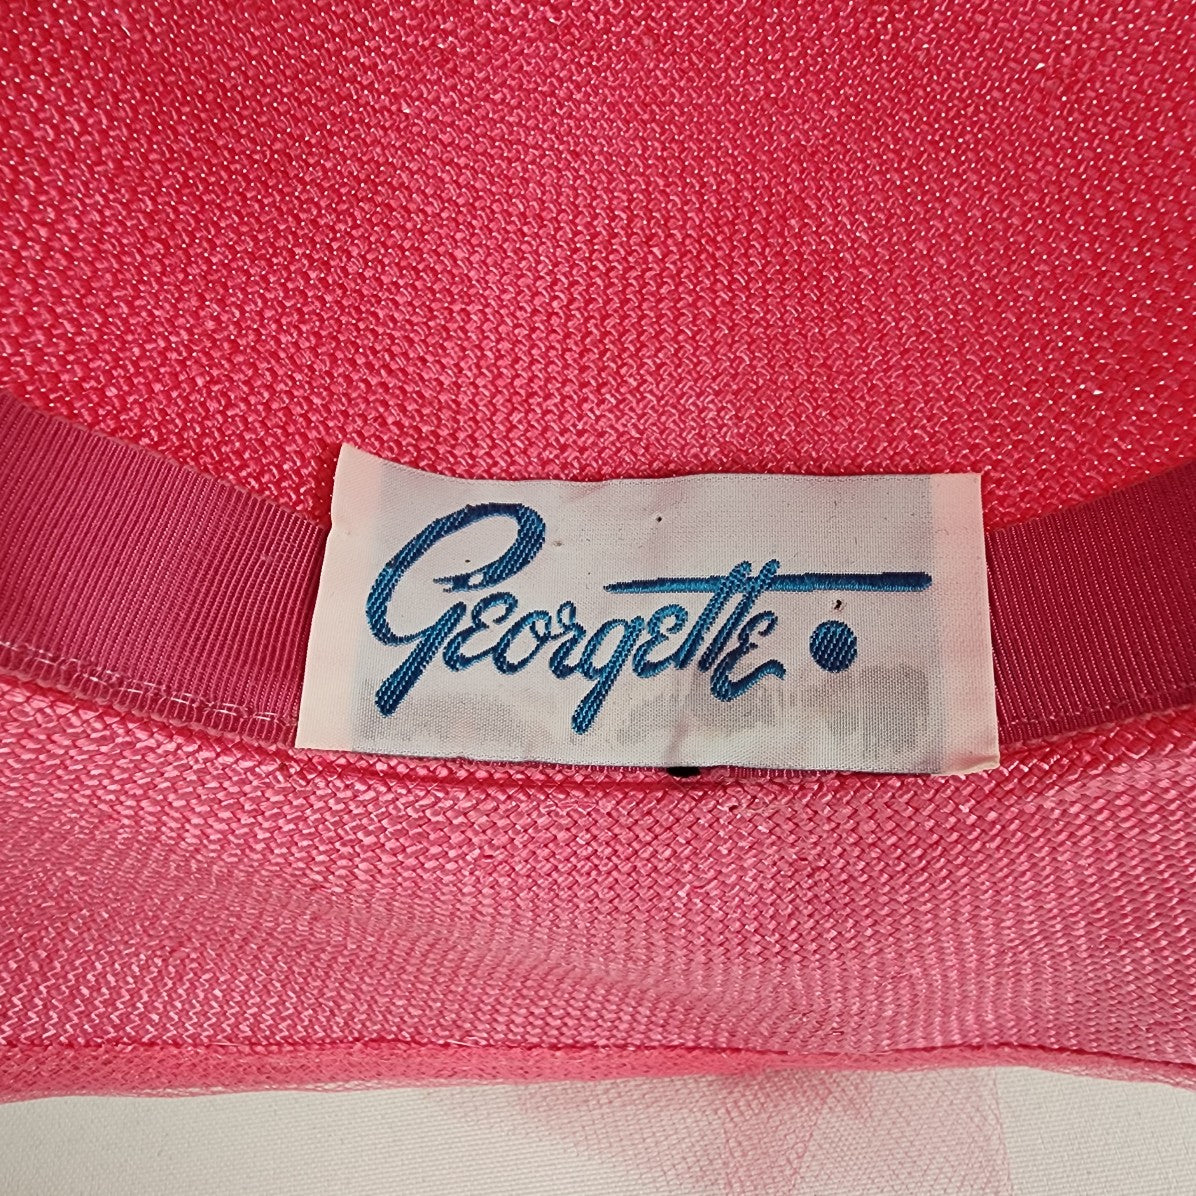 Vintage Georgette Pink Tulle Hat